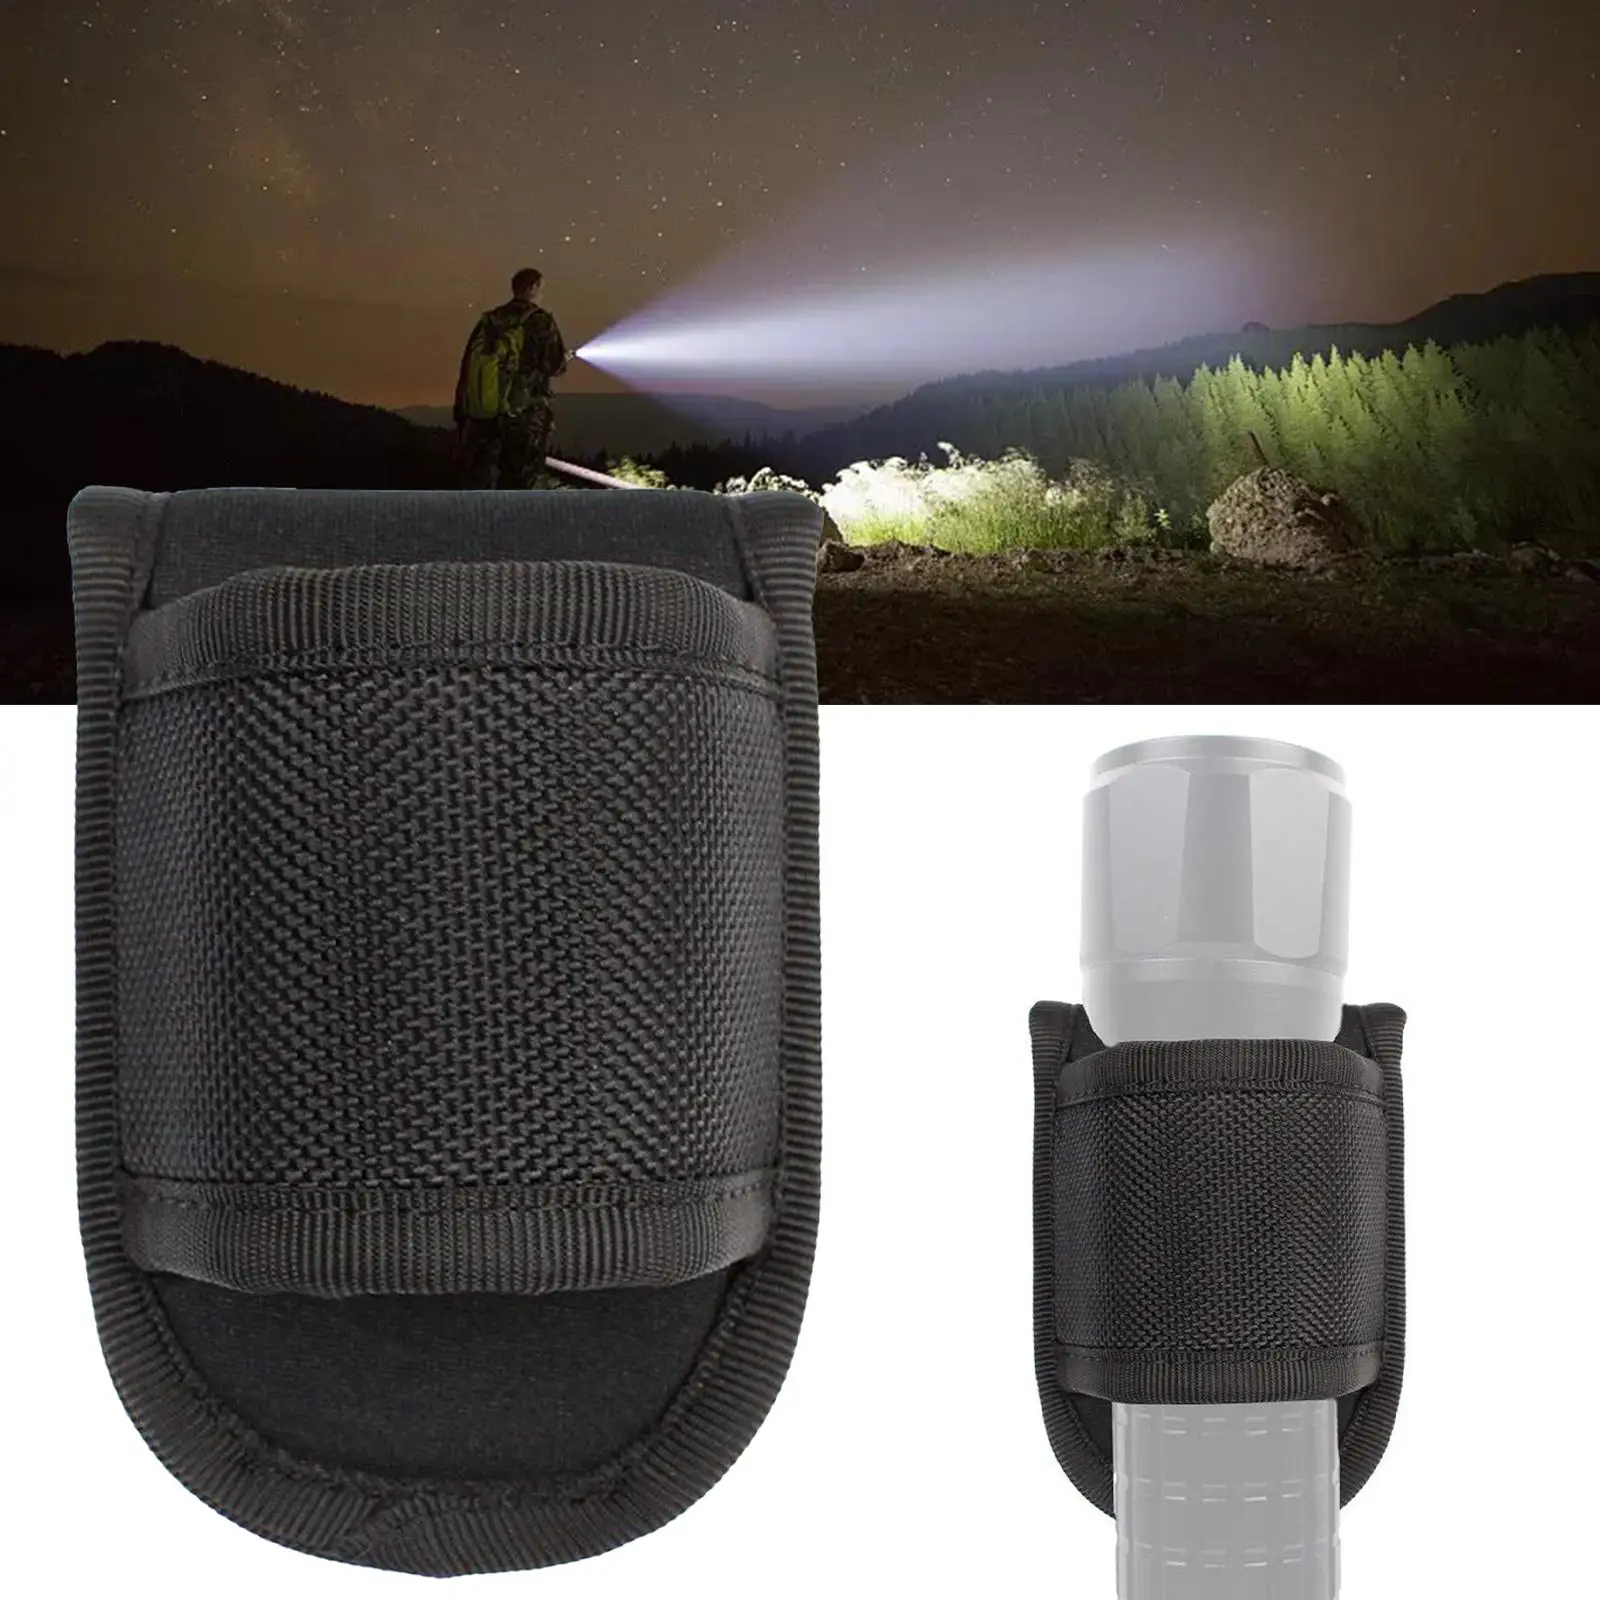 Torch Pouch Holster Organizer Pack Storage Flashlight Holder for Hiking